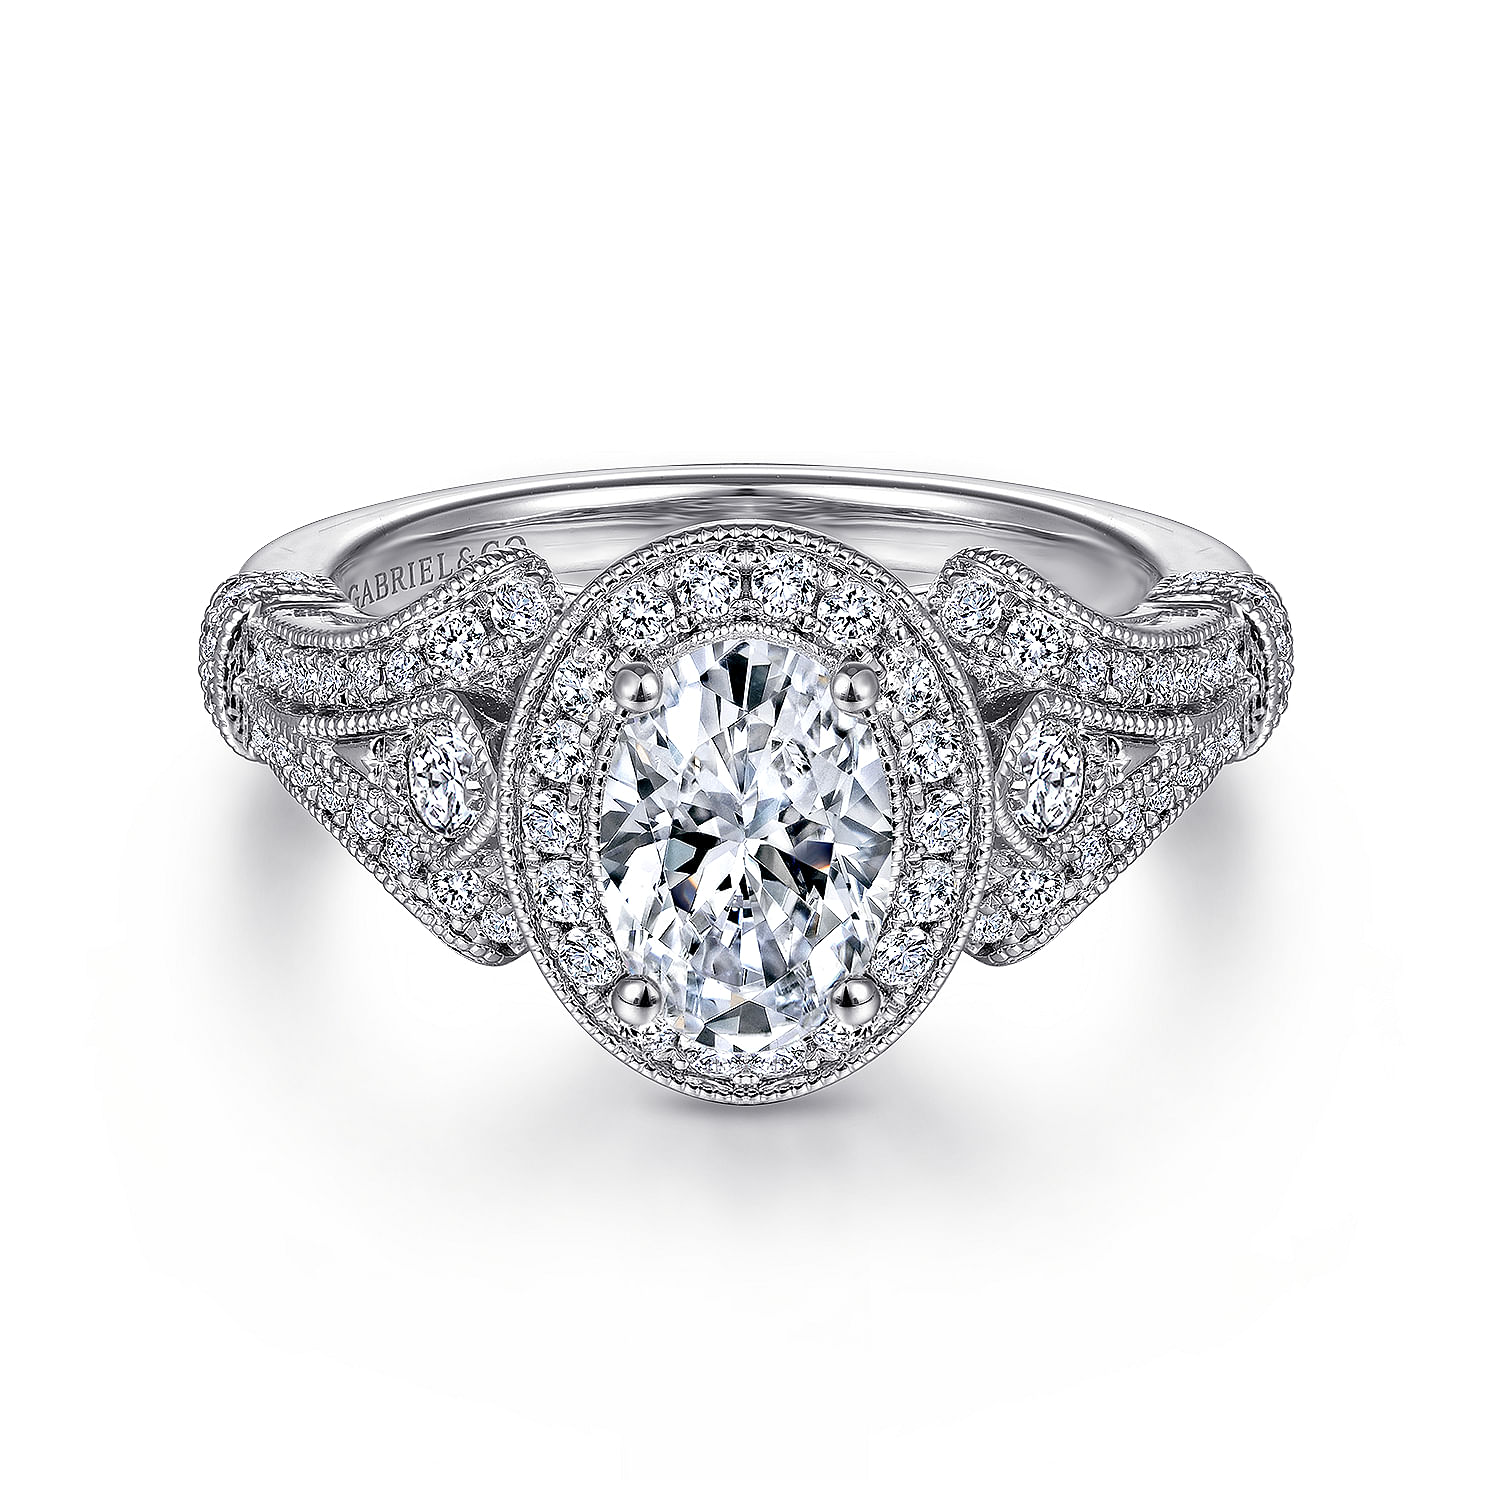 Delilah - Vintage Inspired 14K White Gold Oval Halo Diamond Engagement Ring